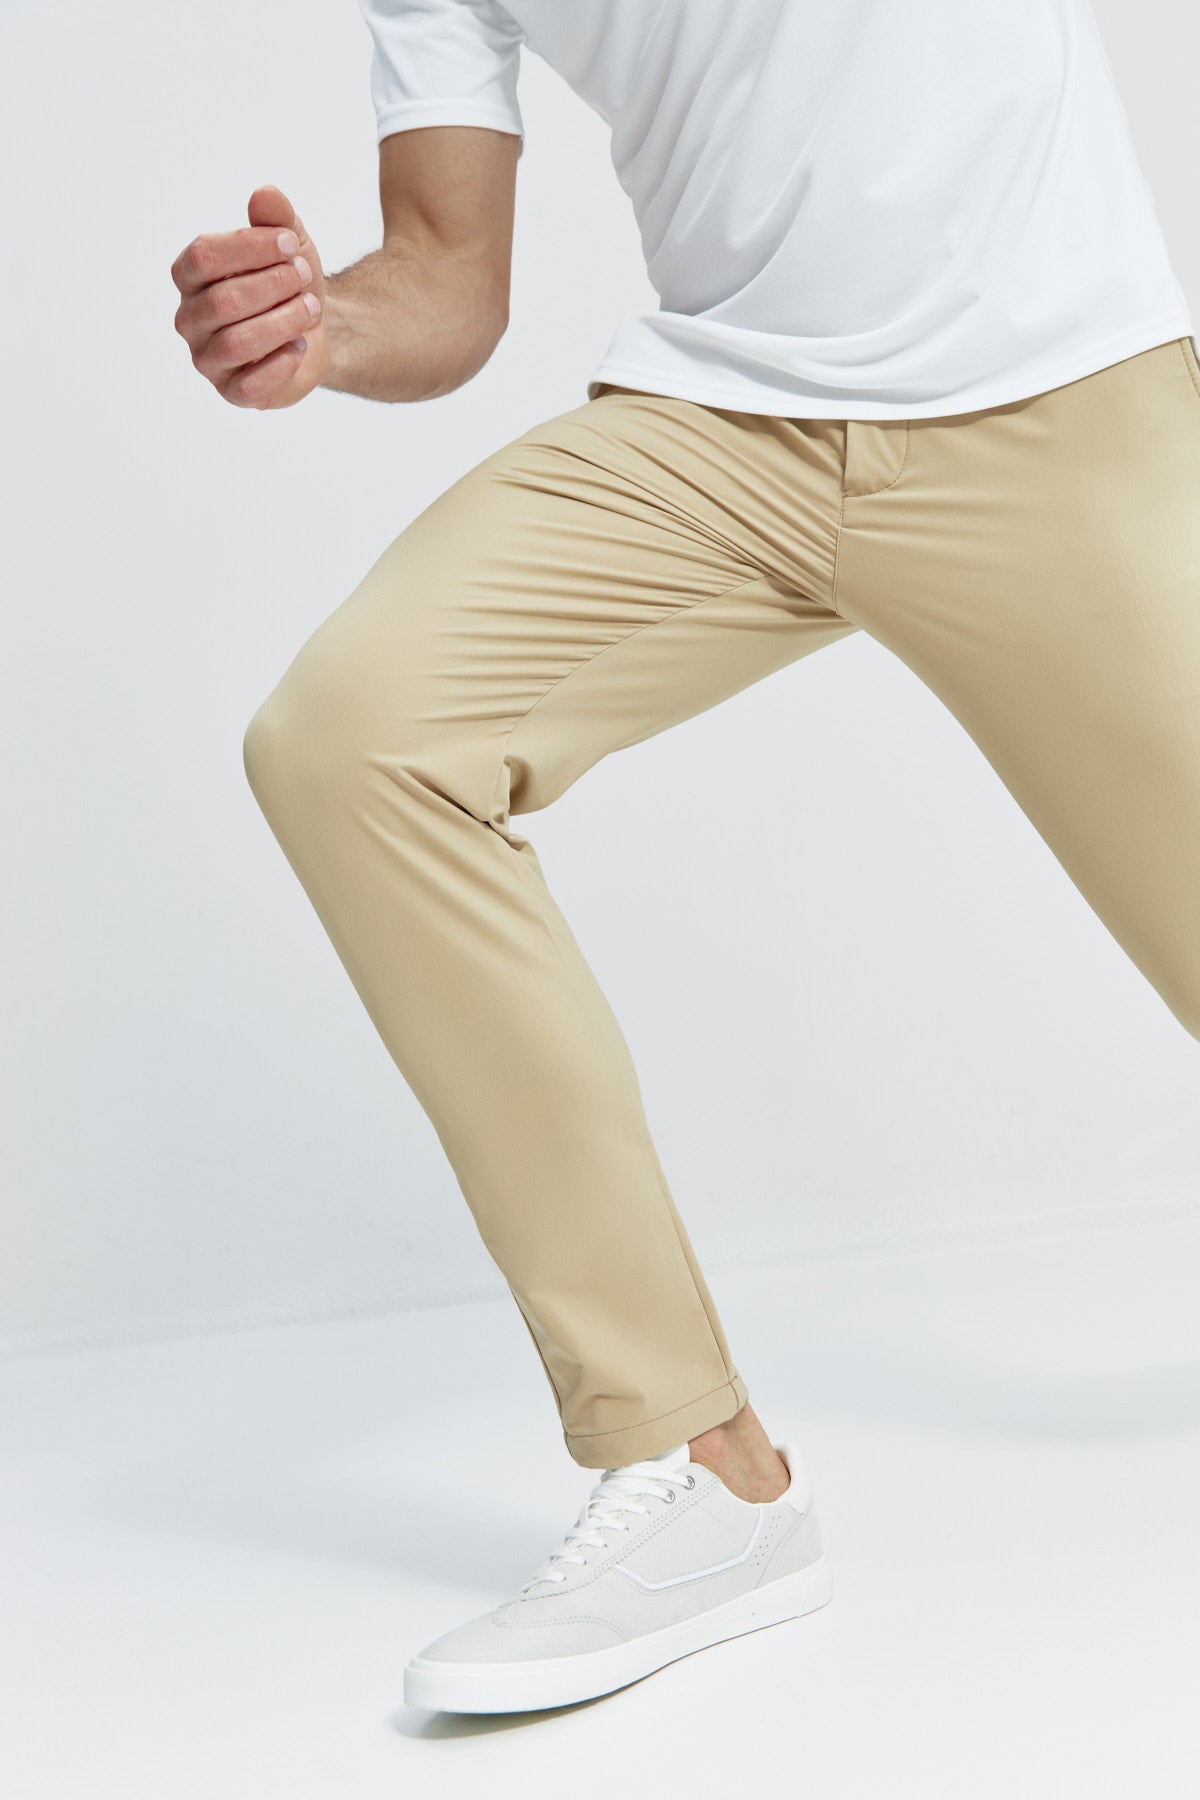 Pantalón para hombre beige: Pantalón chino slim beige para hombre con tecnología termorreguladora Coolmax. Foto flexibilidad.